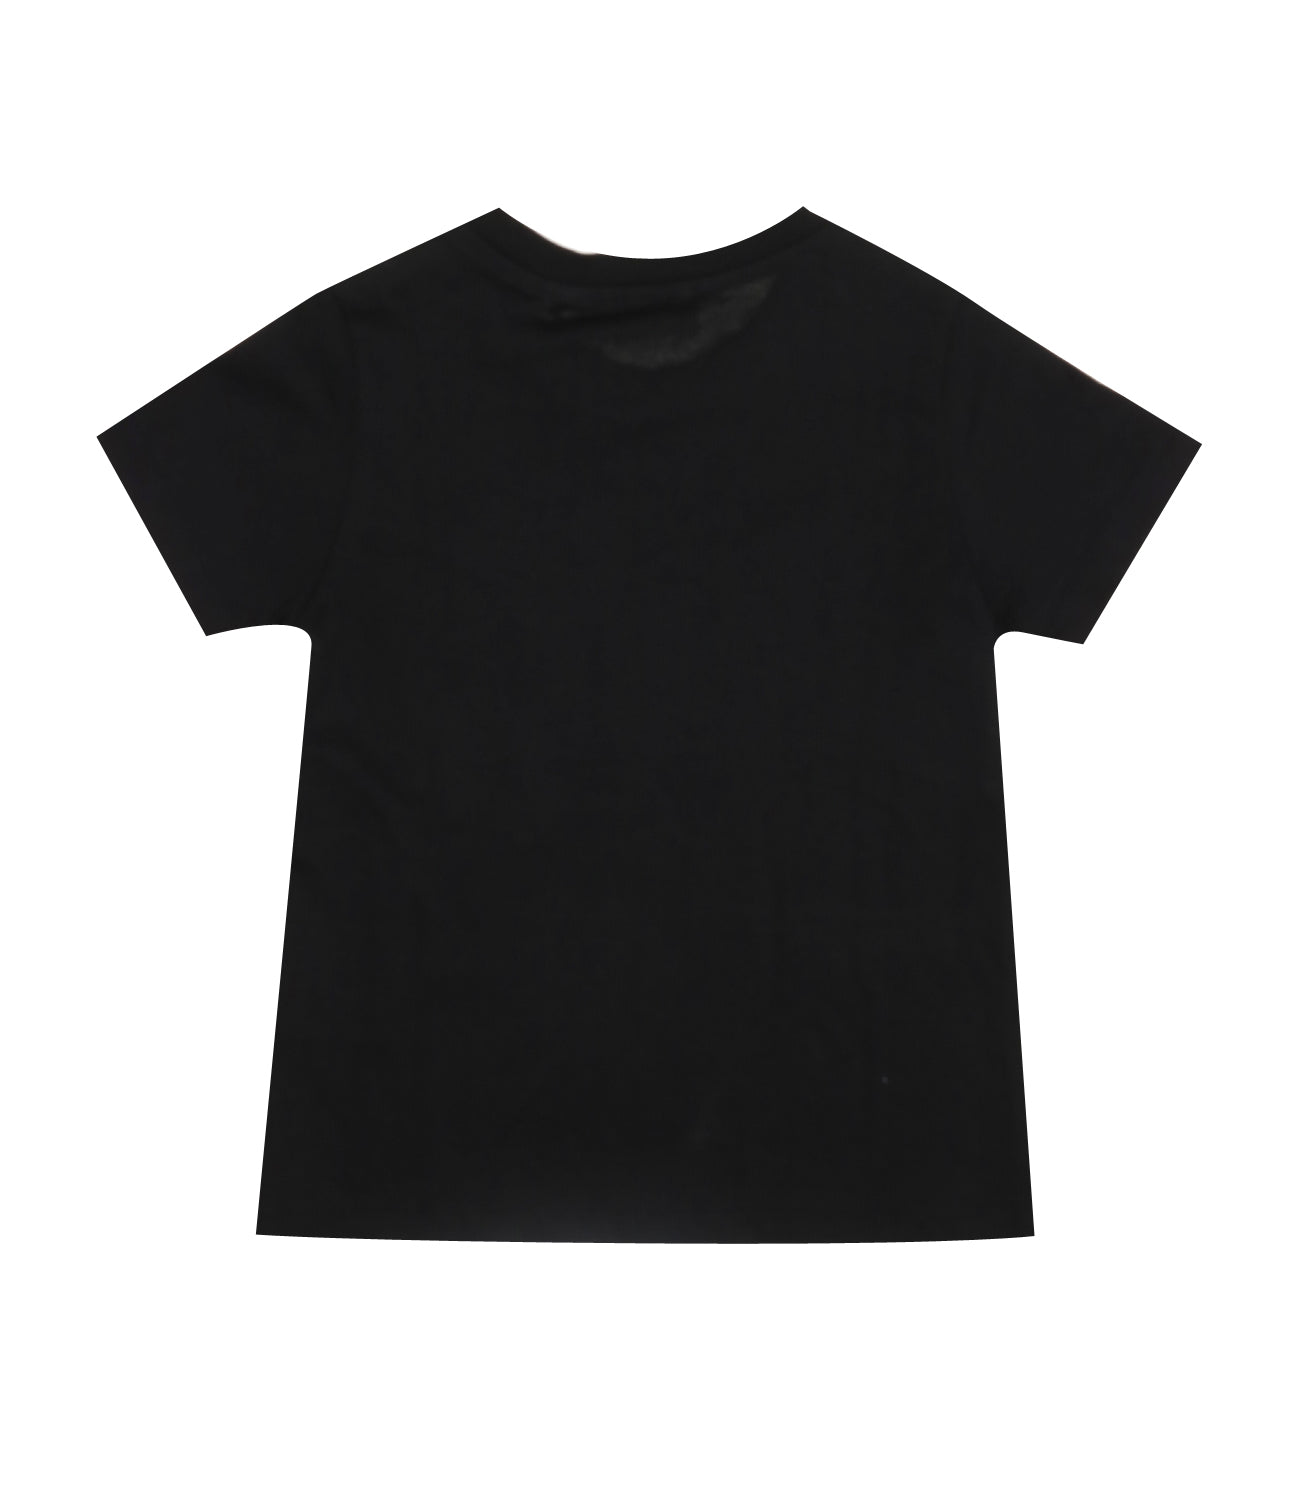 Gaelle Paris Kids | Black T-Shirt